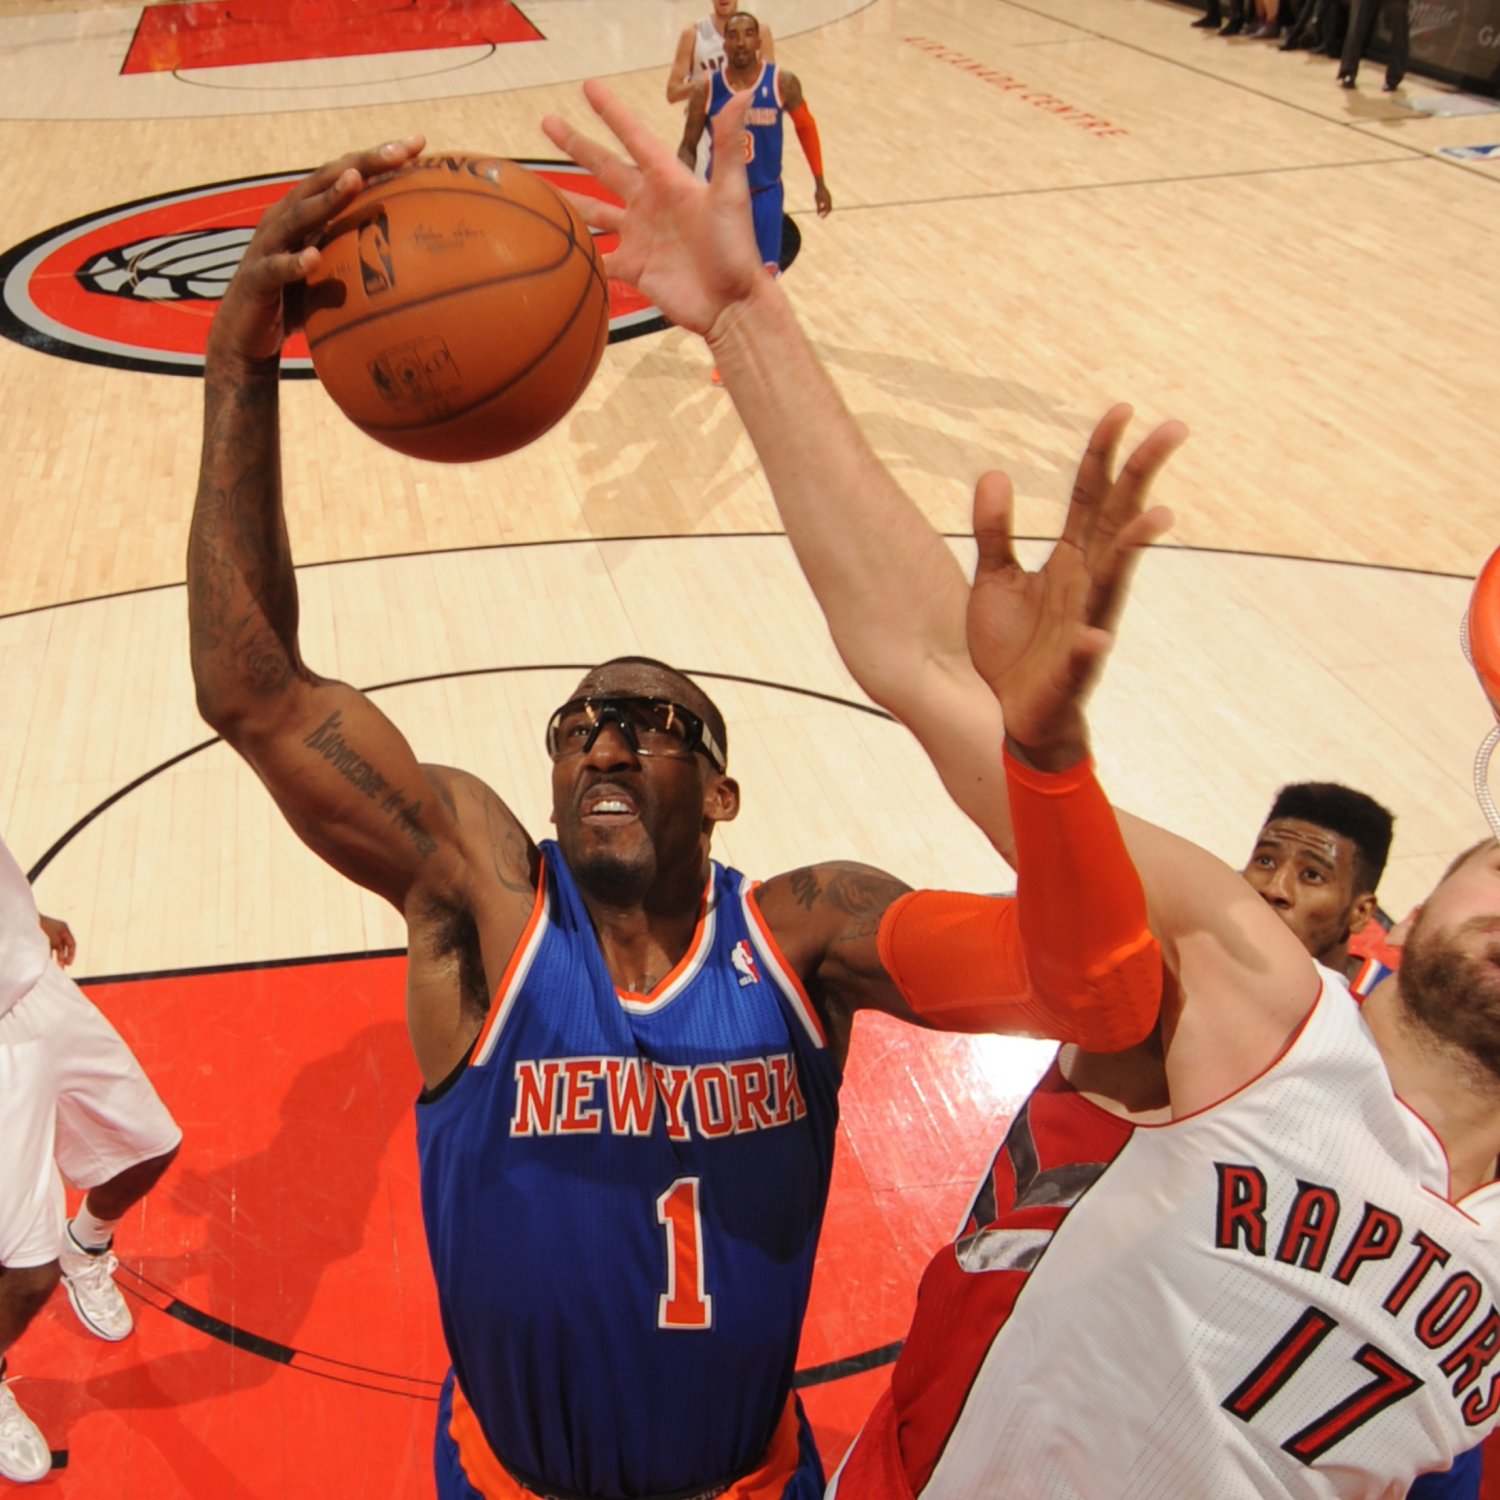 The Latest New York Knicks News SportSpyder